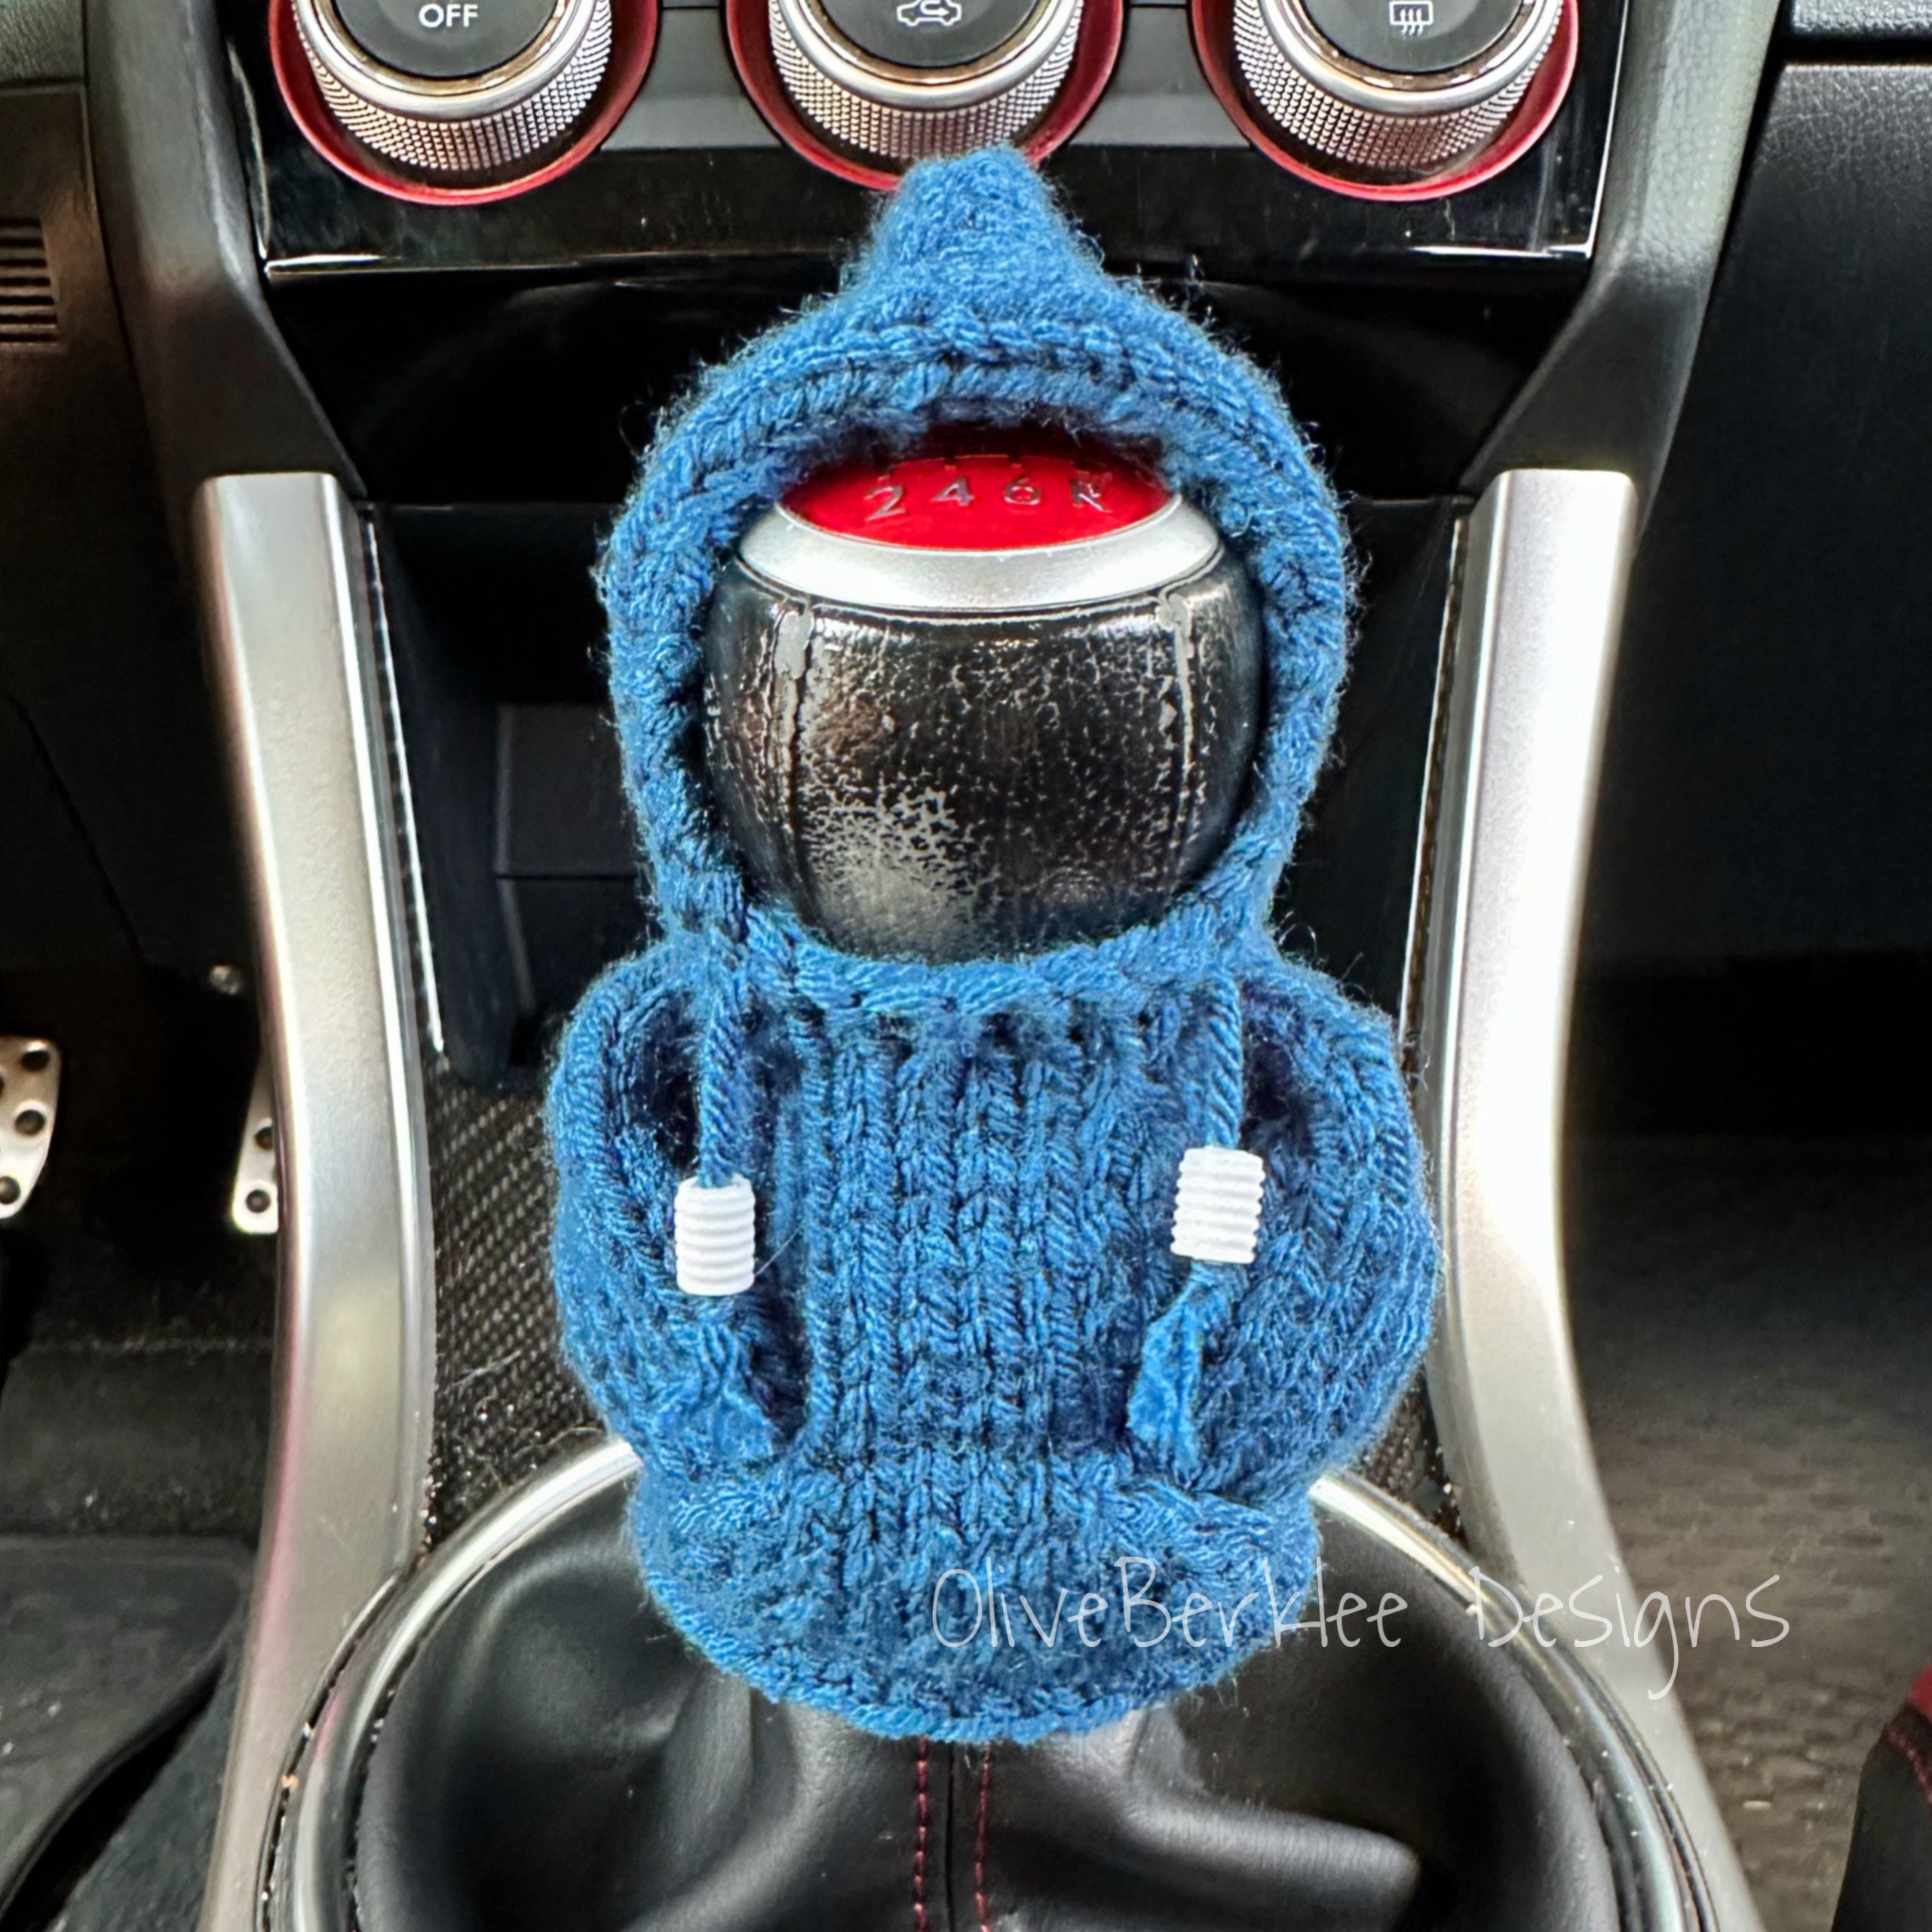 Gear Shift Hoodie Crocheted Shift Knob Hoodies Funny Car Accessory